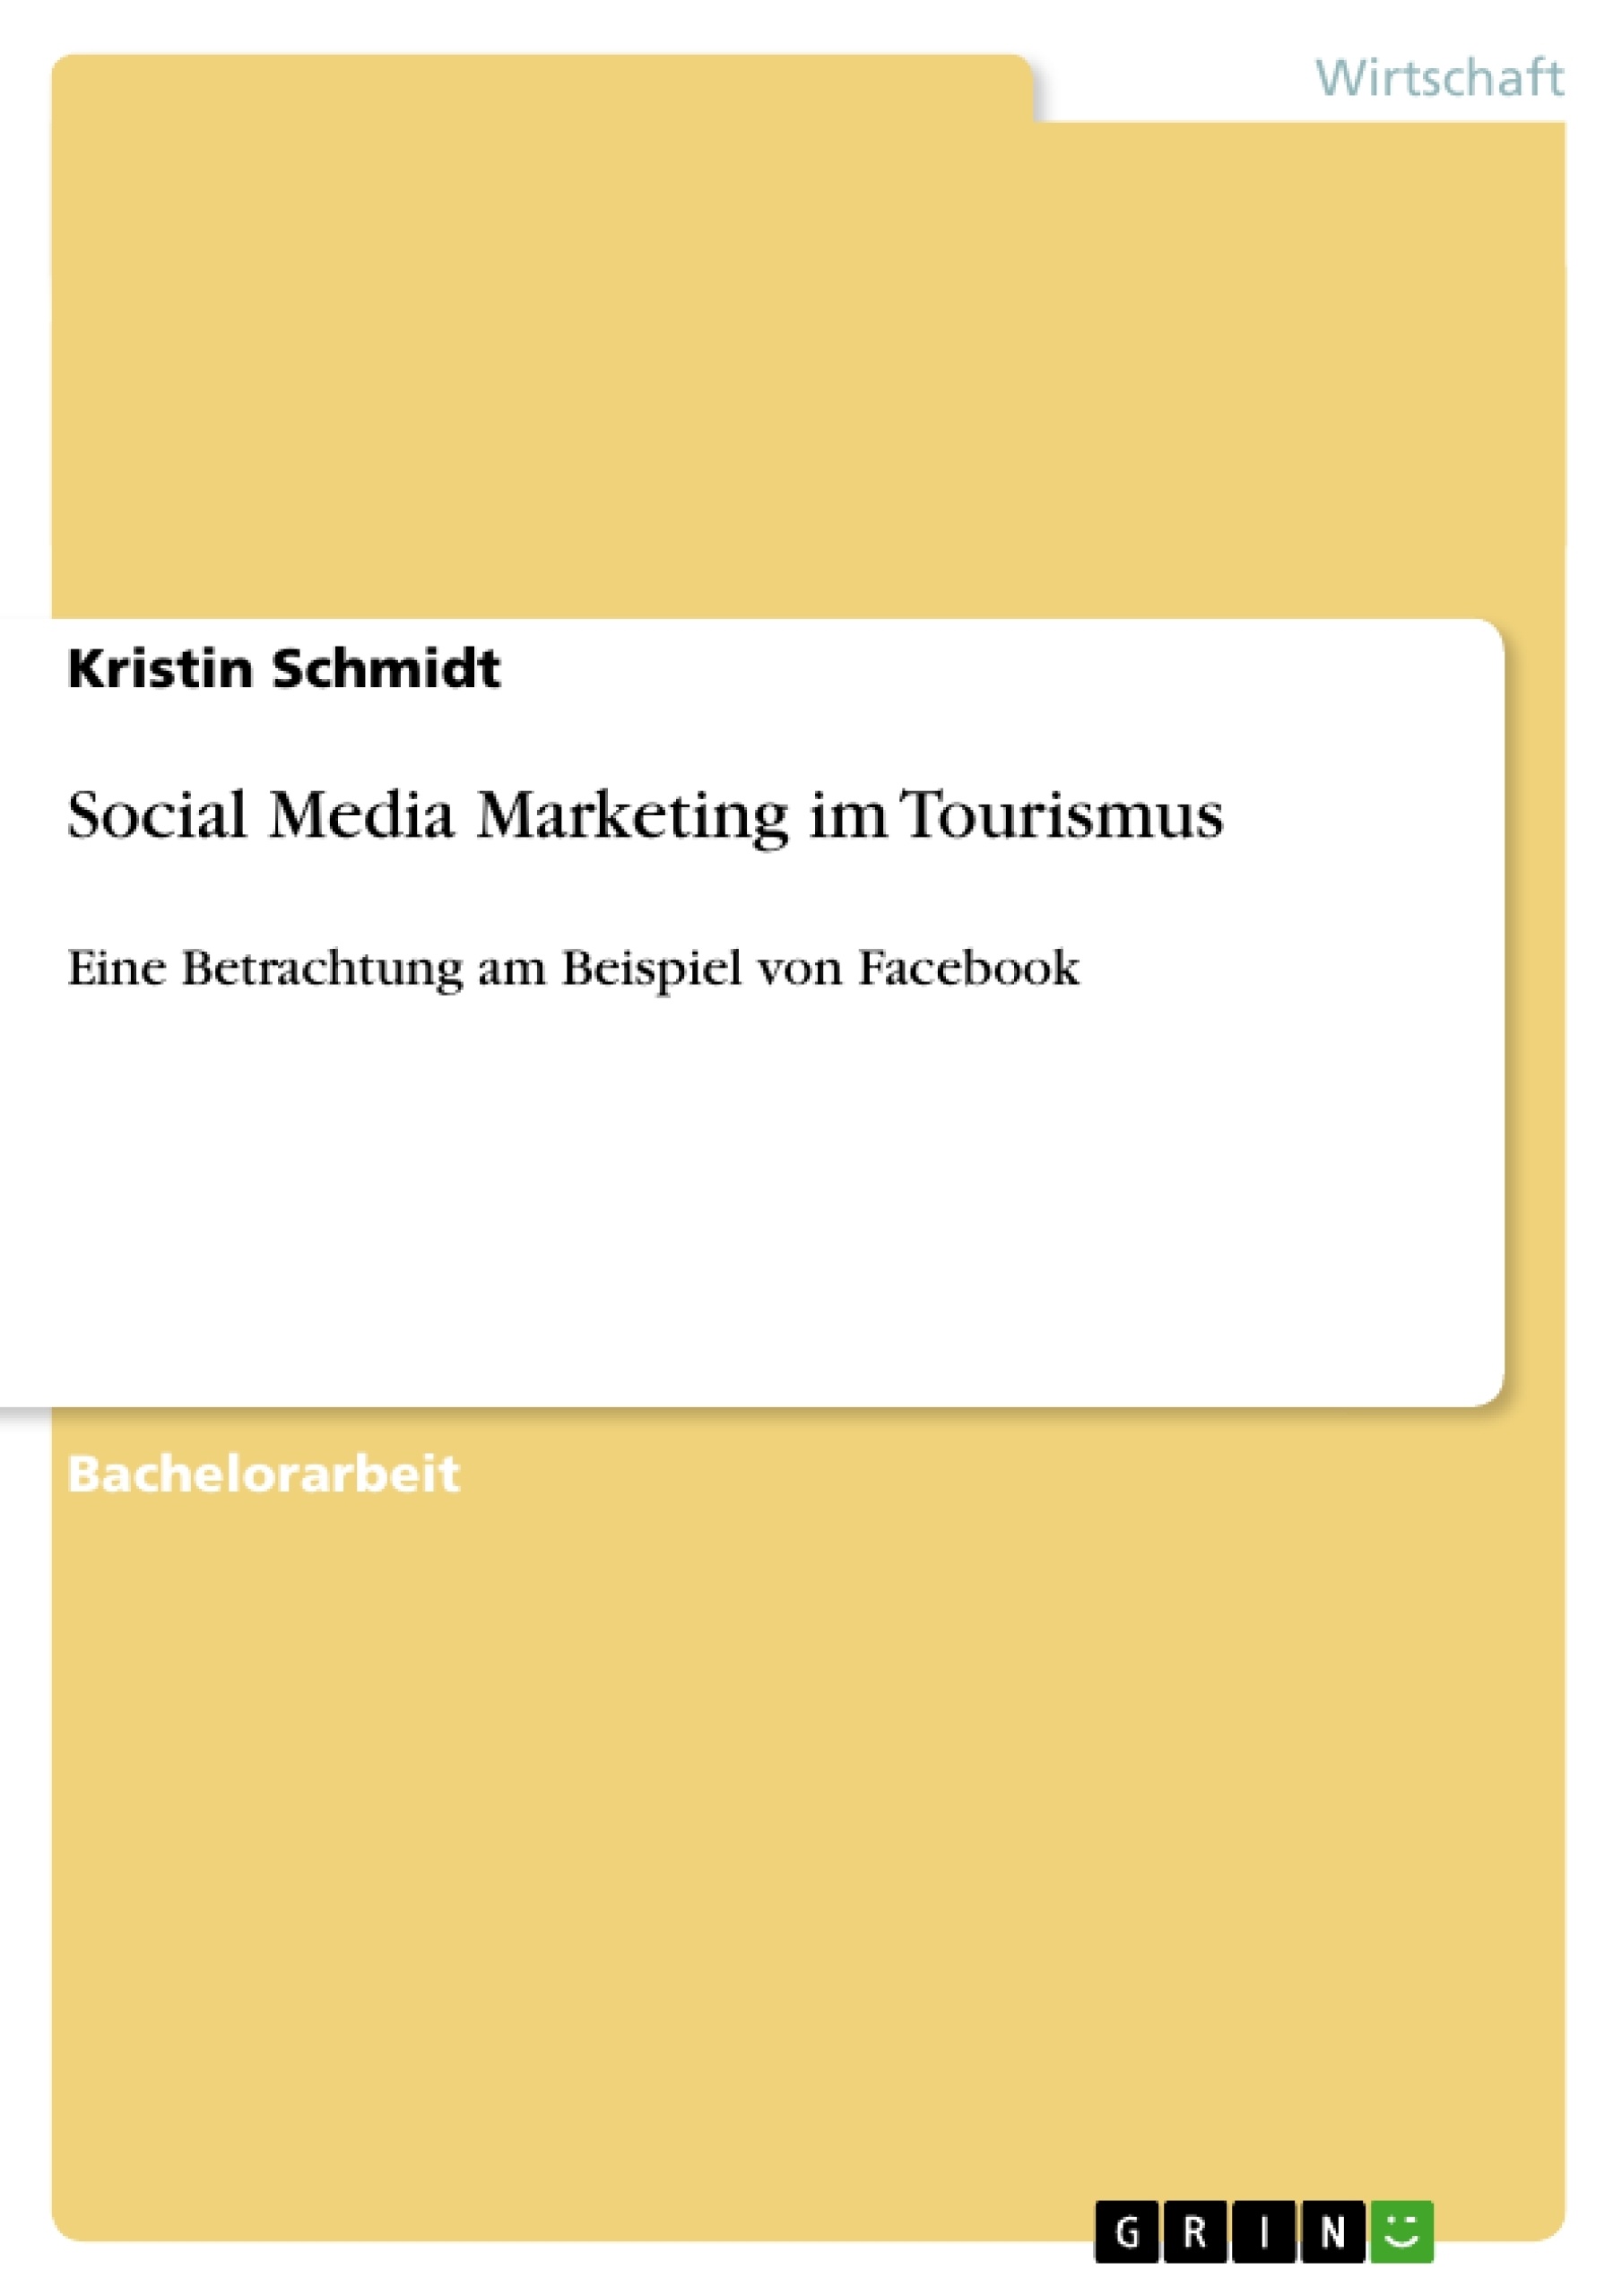 Social Media Marketing Im Tourismus Diplomarbeiten24 De Diplomarbeiten24 De